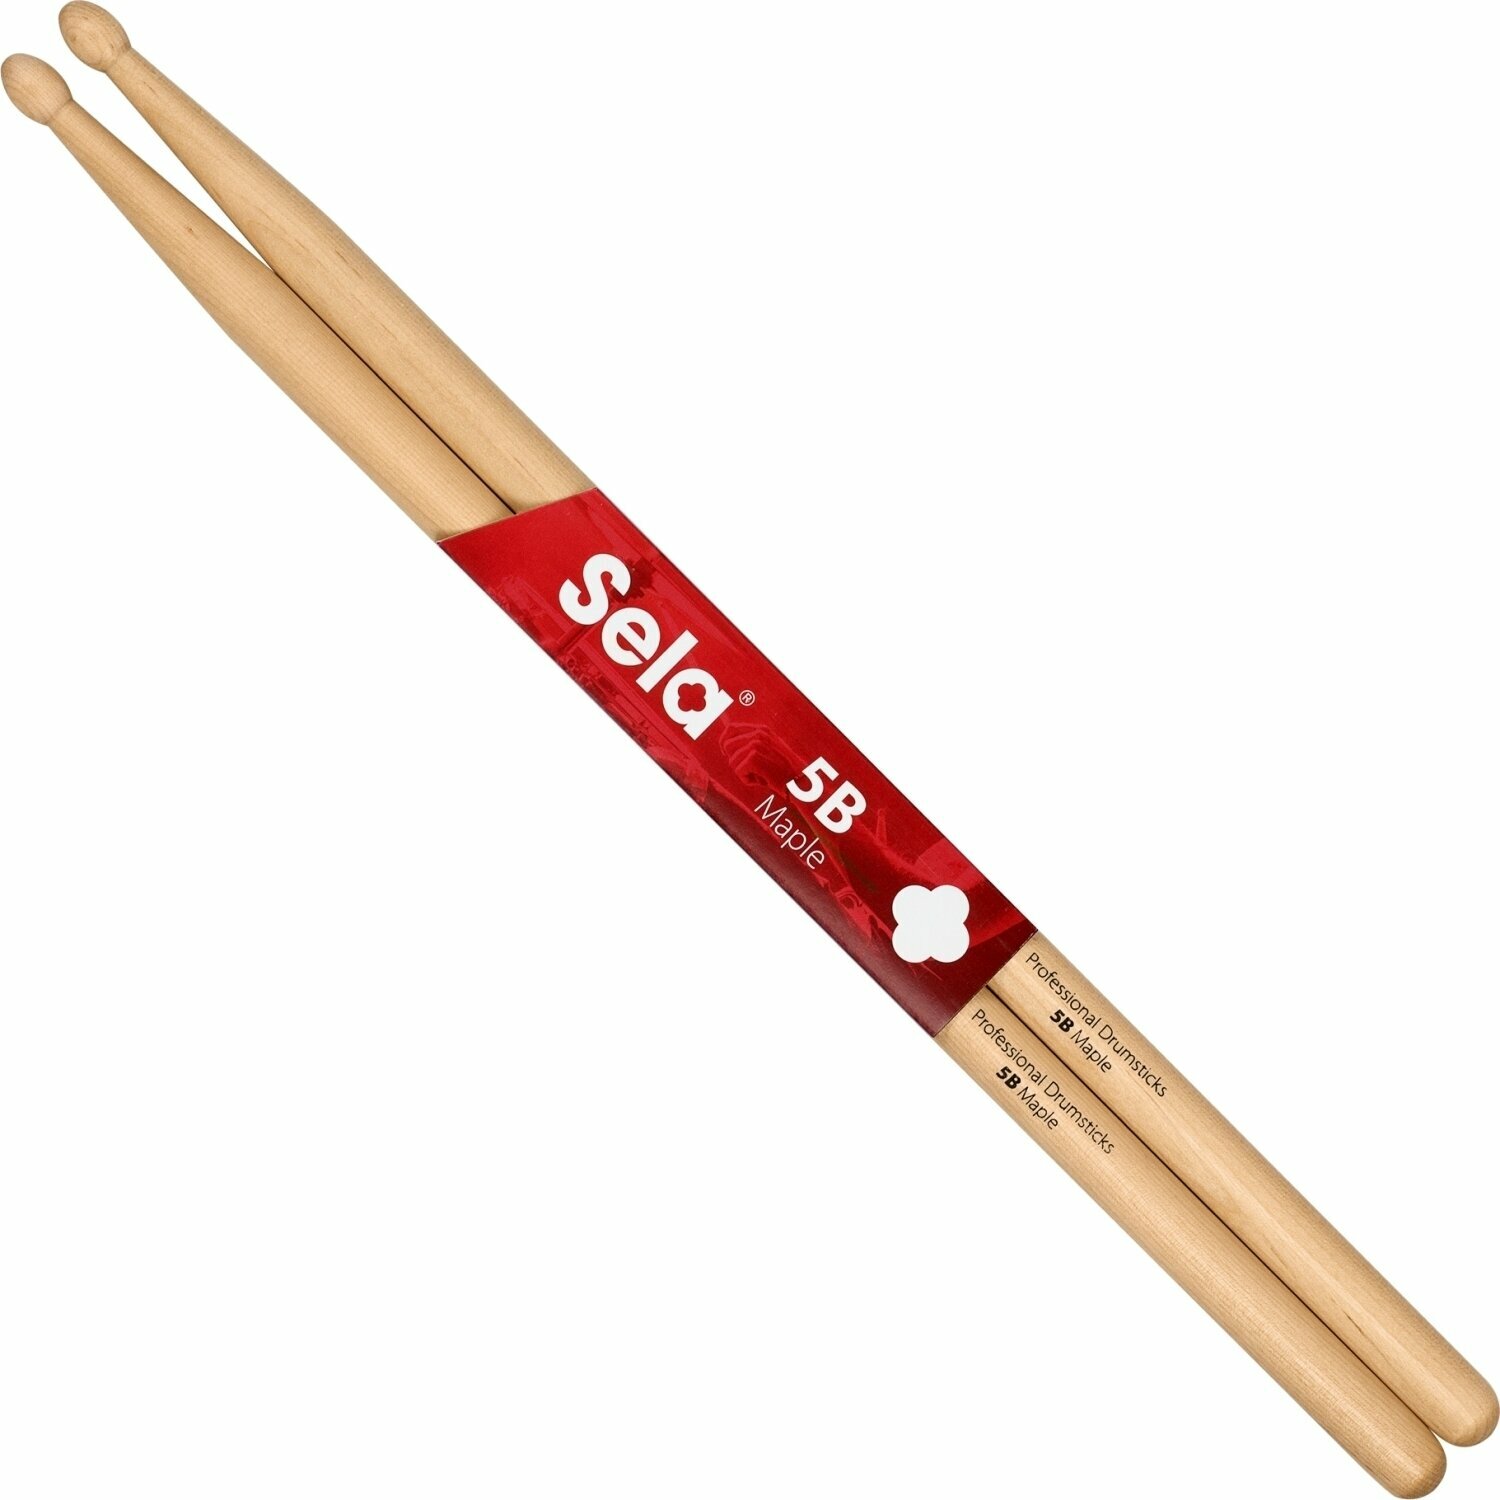 Bubenické paličky Sela SE 273 Professional Drumsticks 5B - 6 Pair Bubenické paličky